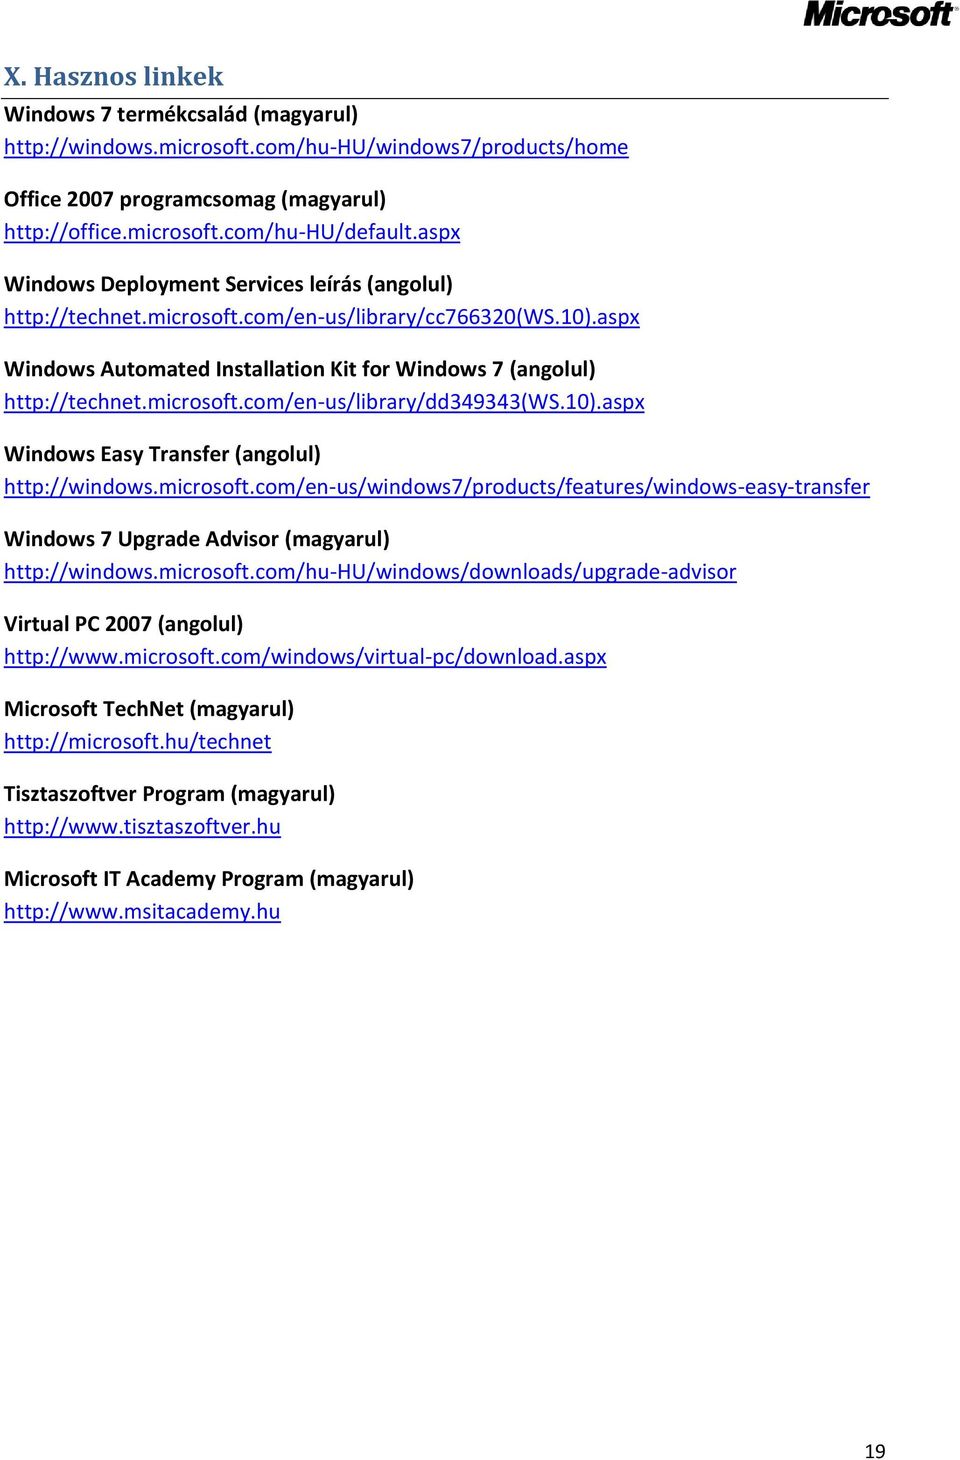 10).aspx Windows Easy Transfer (angolul) http://windows.microsoft.com/en-us/windows7/products/features/windows-easy-transfer Windows 7 Upgrade Advisor (magyarul) http://windows.microsoft.com/hu-hu/windows/downloads/upgrade-advisor Virtual PC 2007 (angolul) http://www.